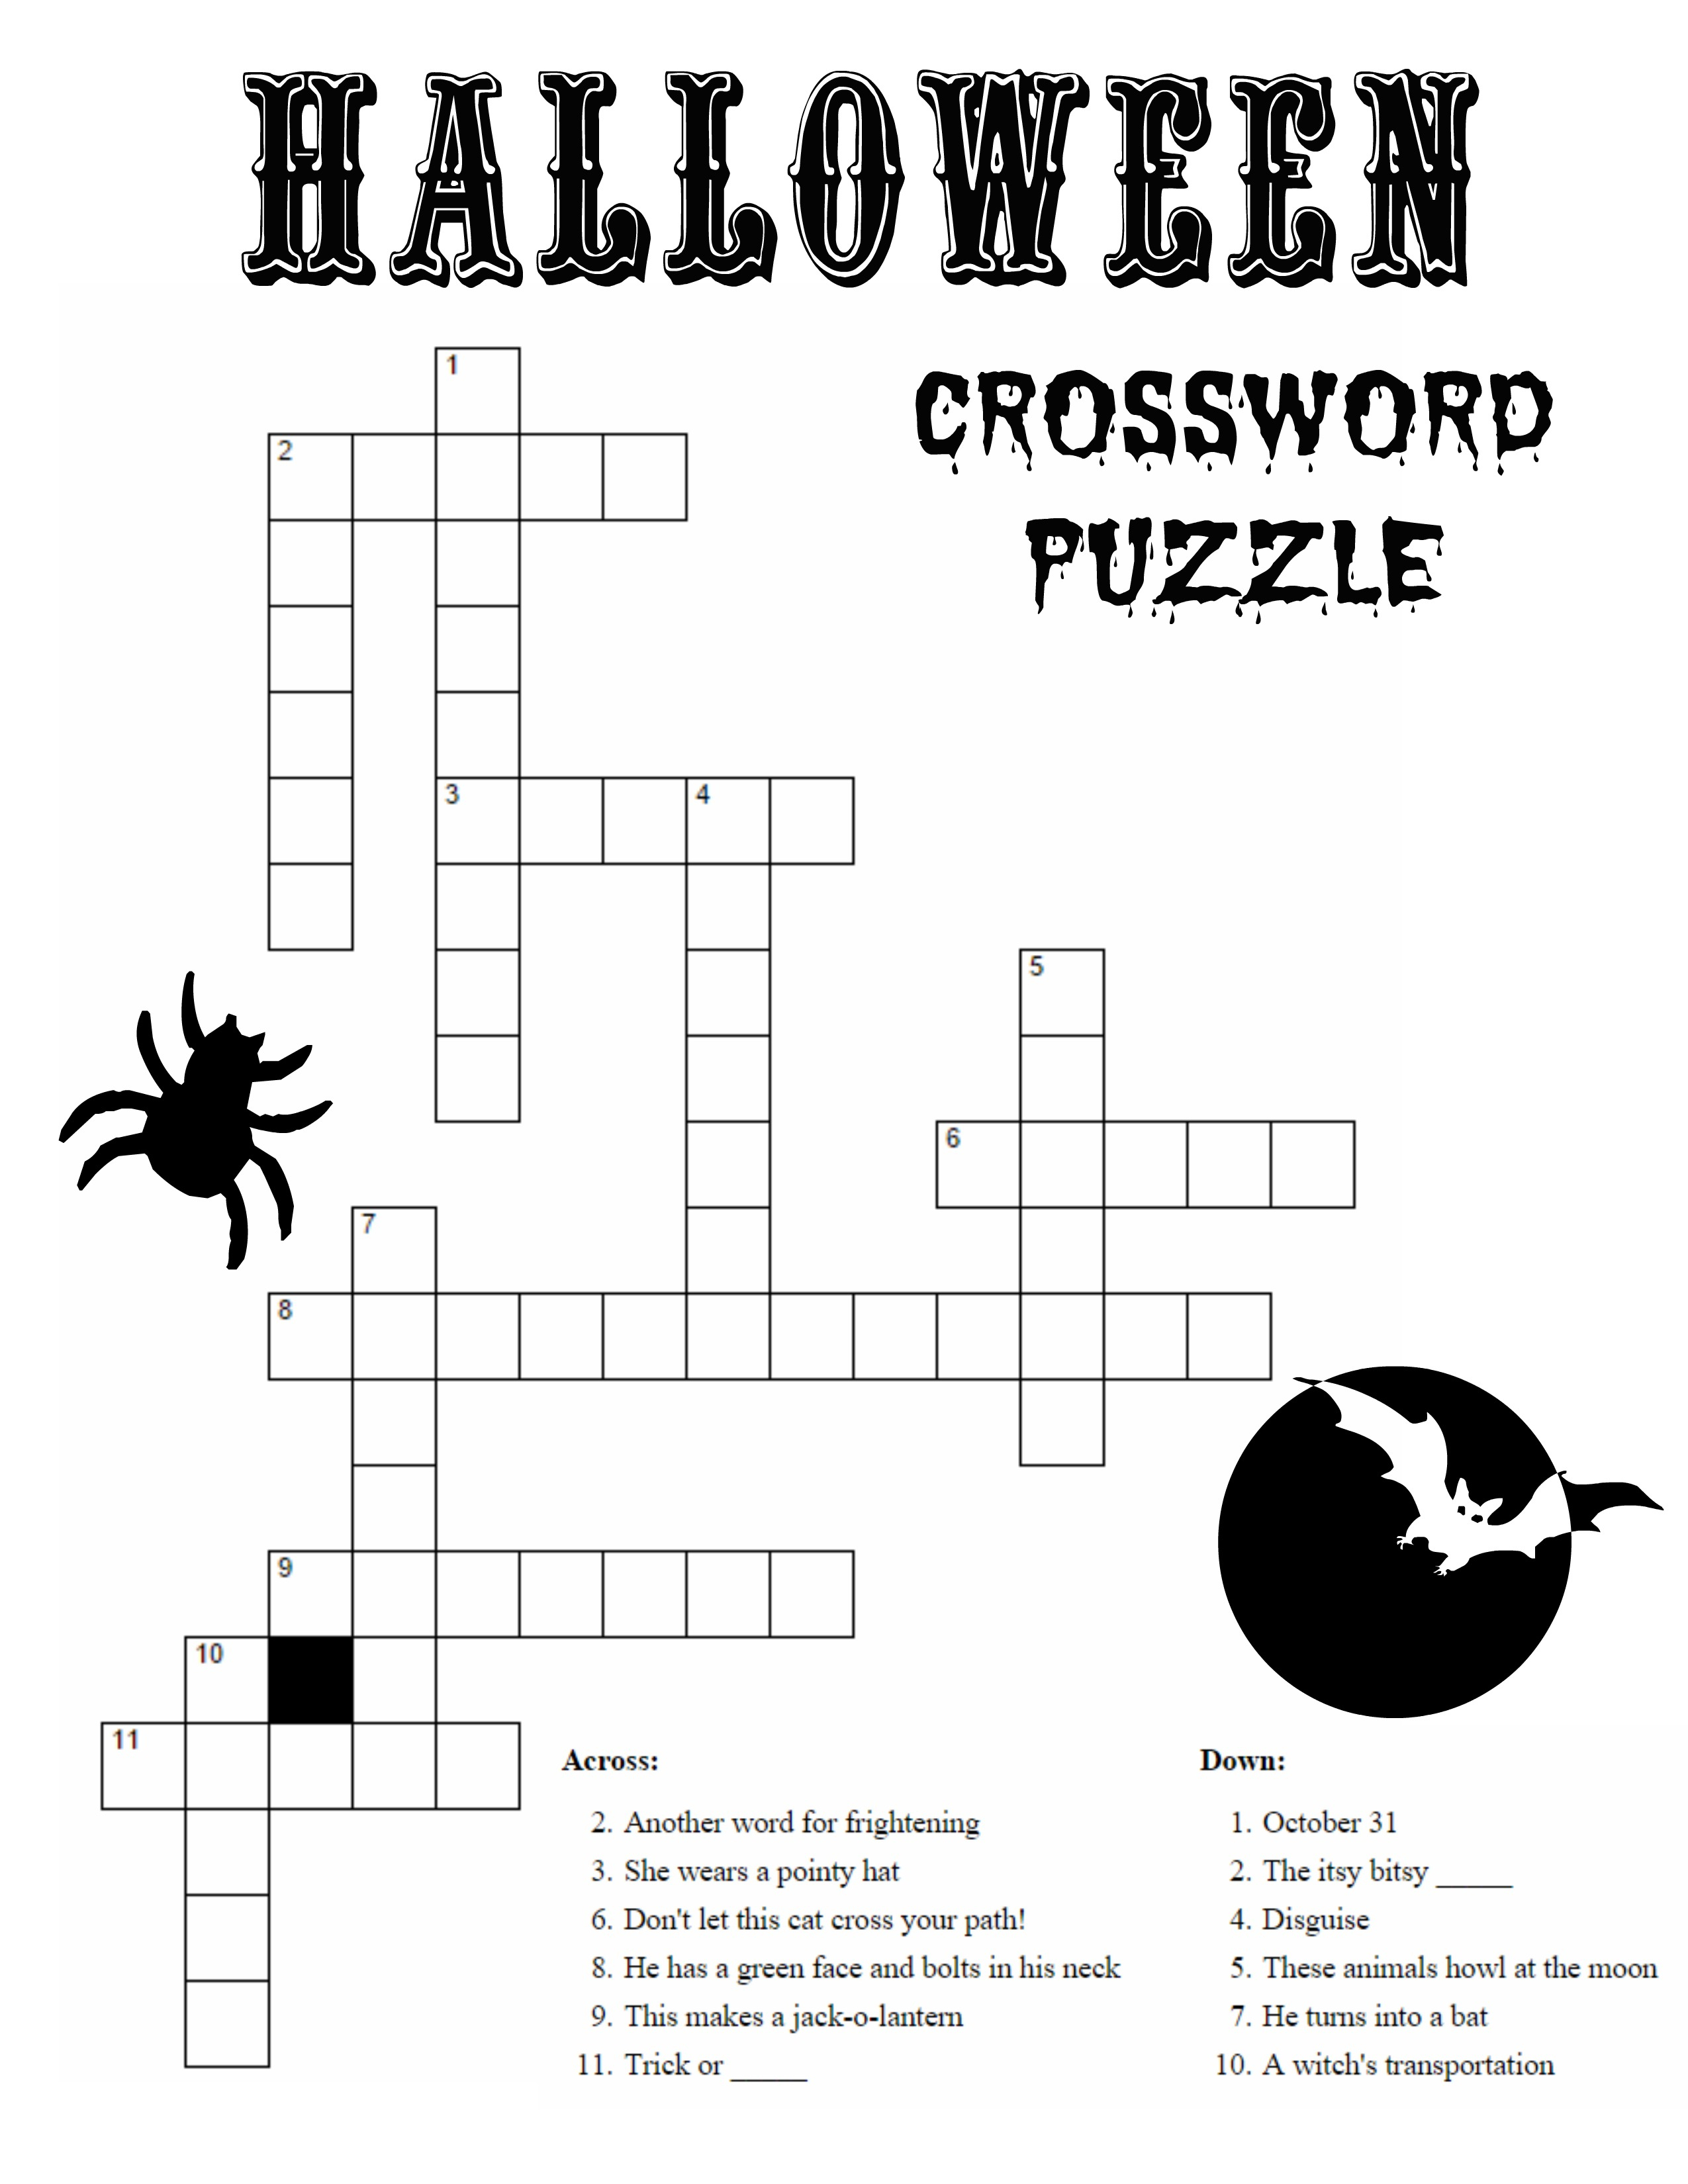 Halloween Crossword Puzzle Printable Paringin st2